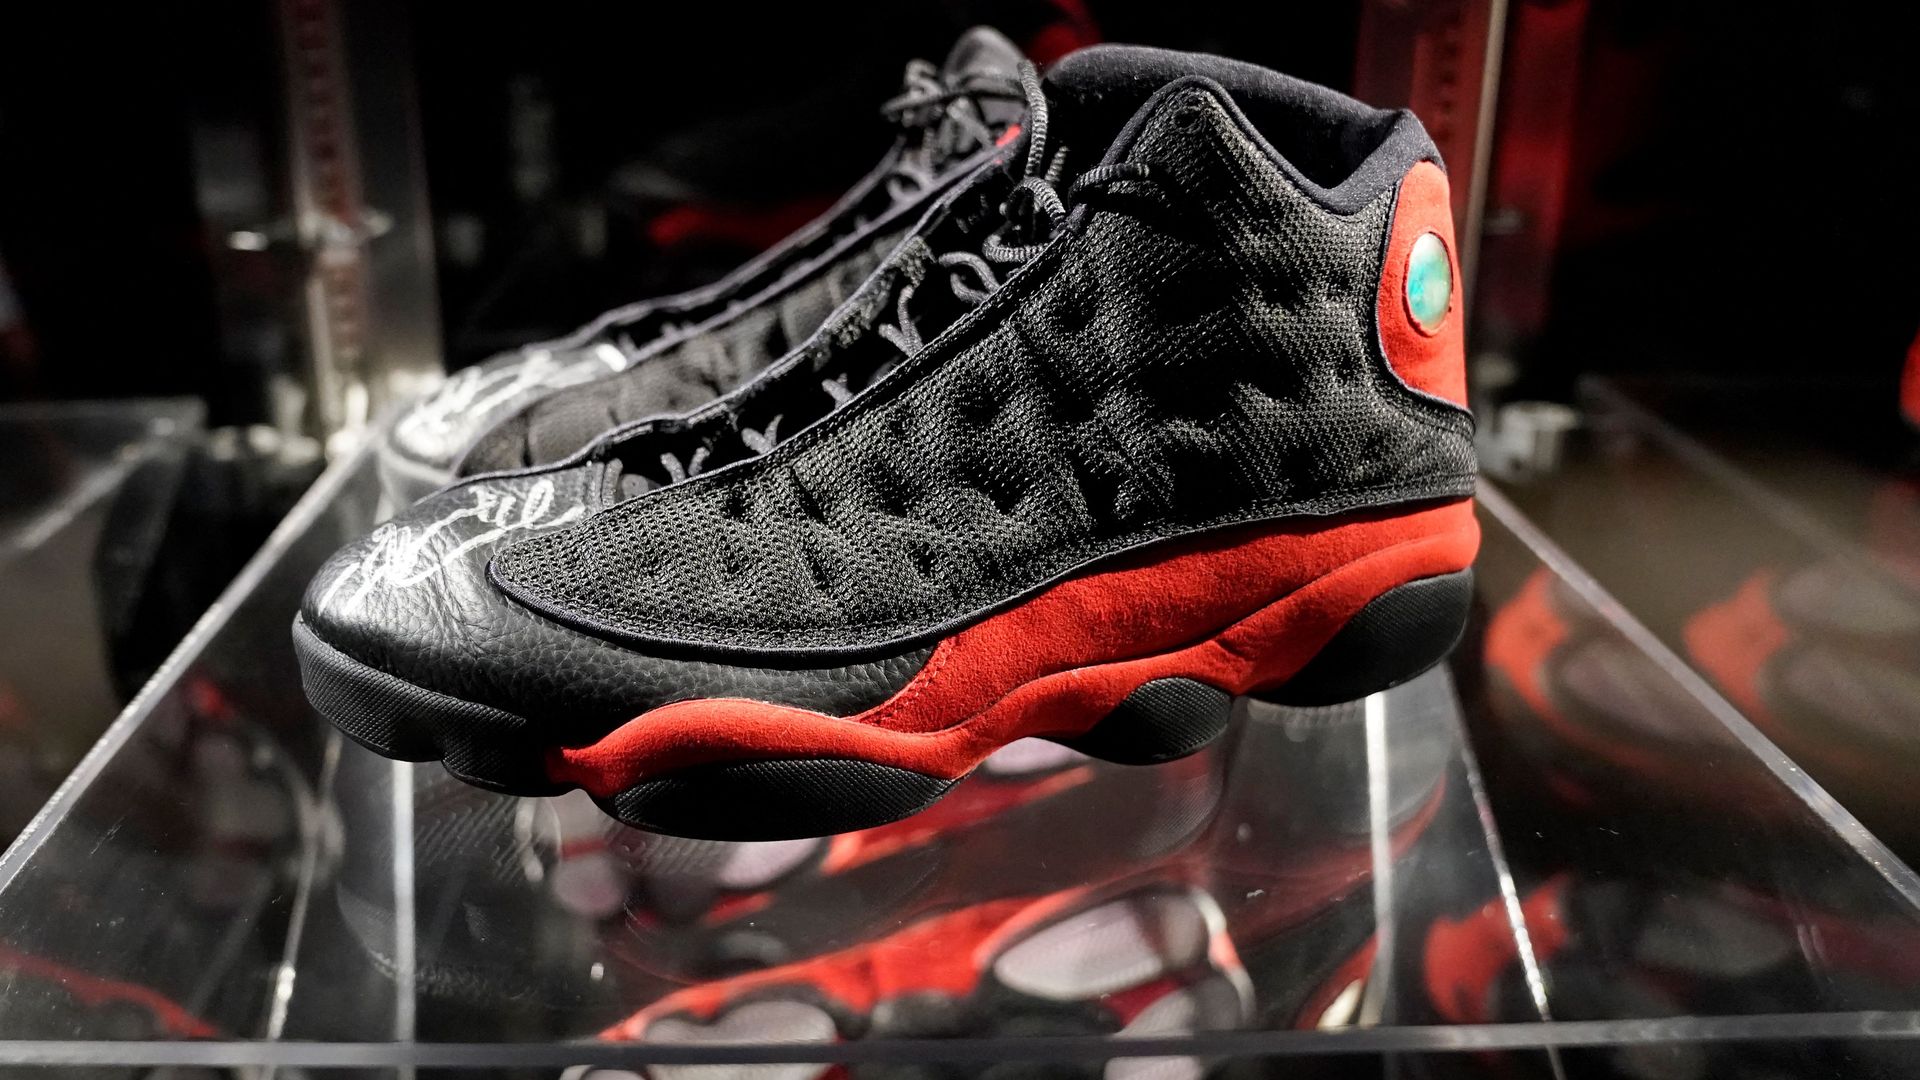 Michael Jordan reach record $2.2 million sports memorabilia booms